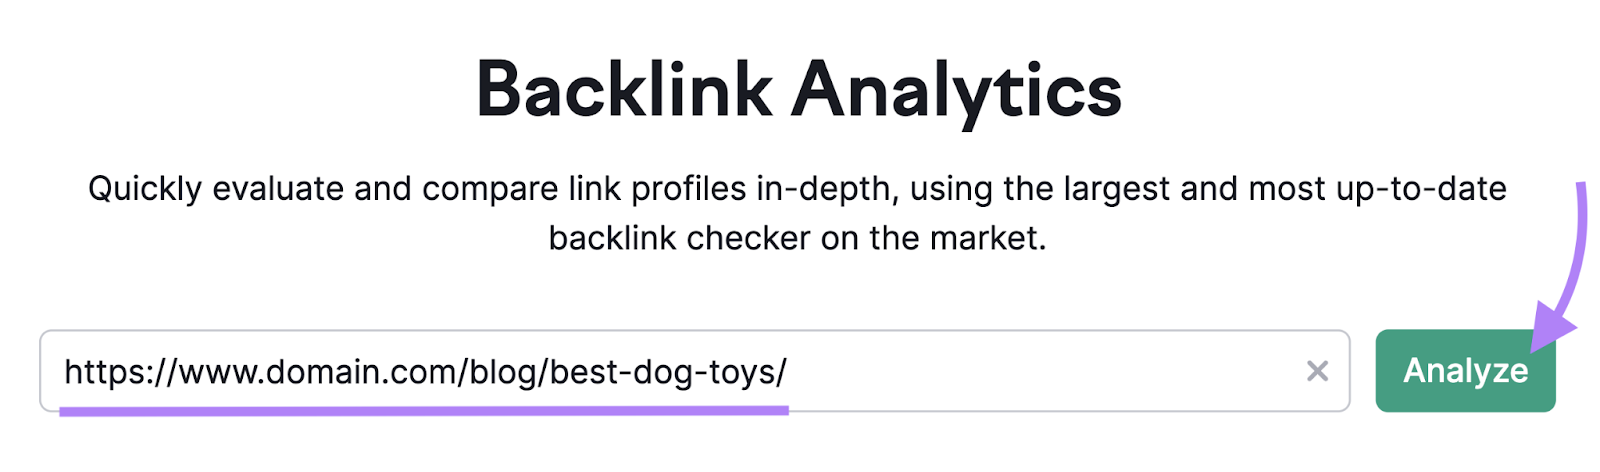 Semrush’s Backlink Analytics tool